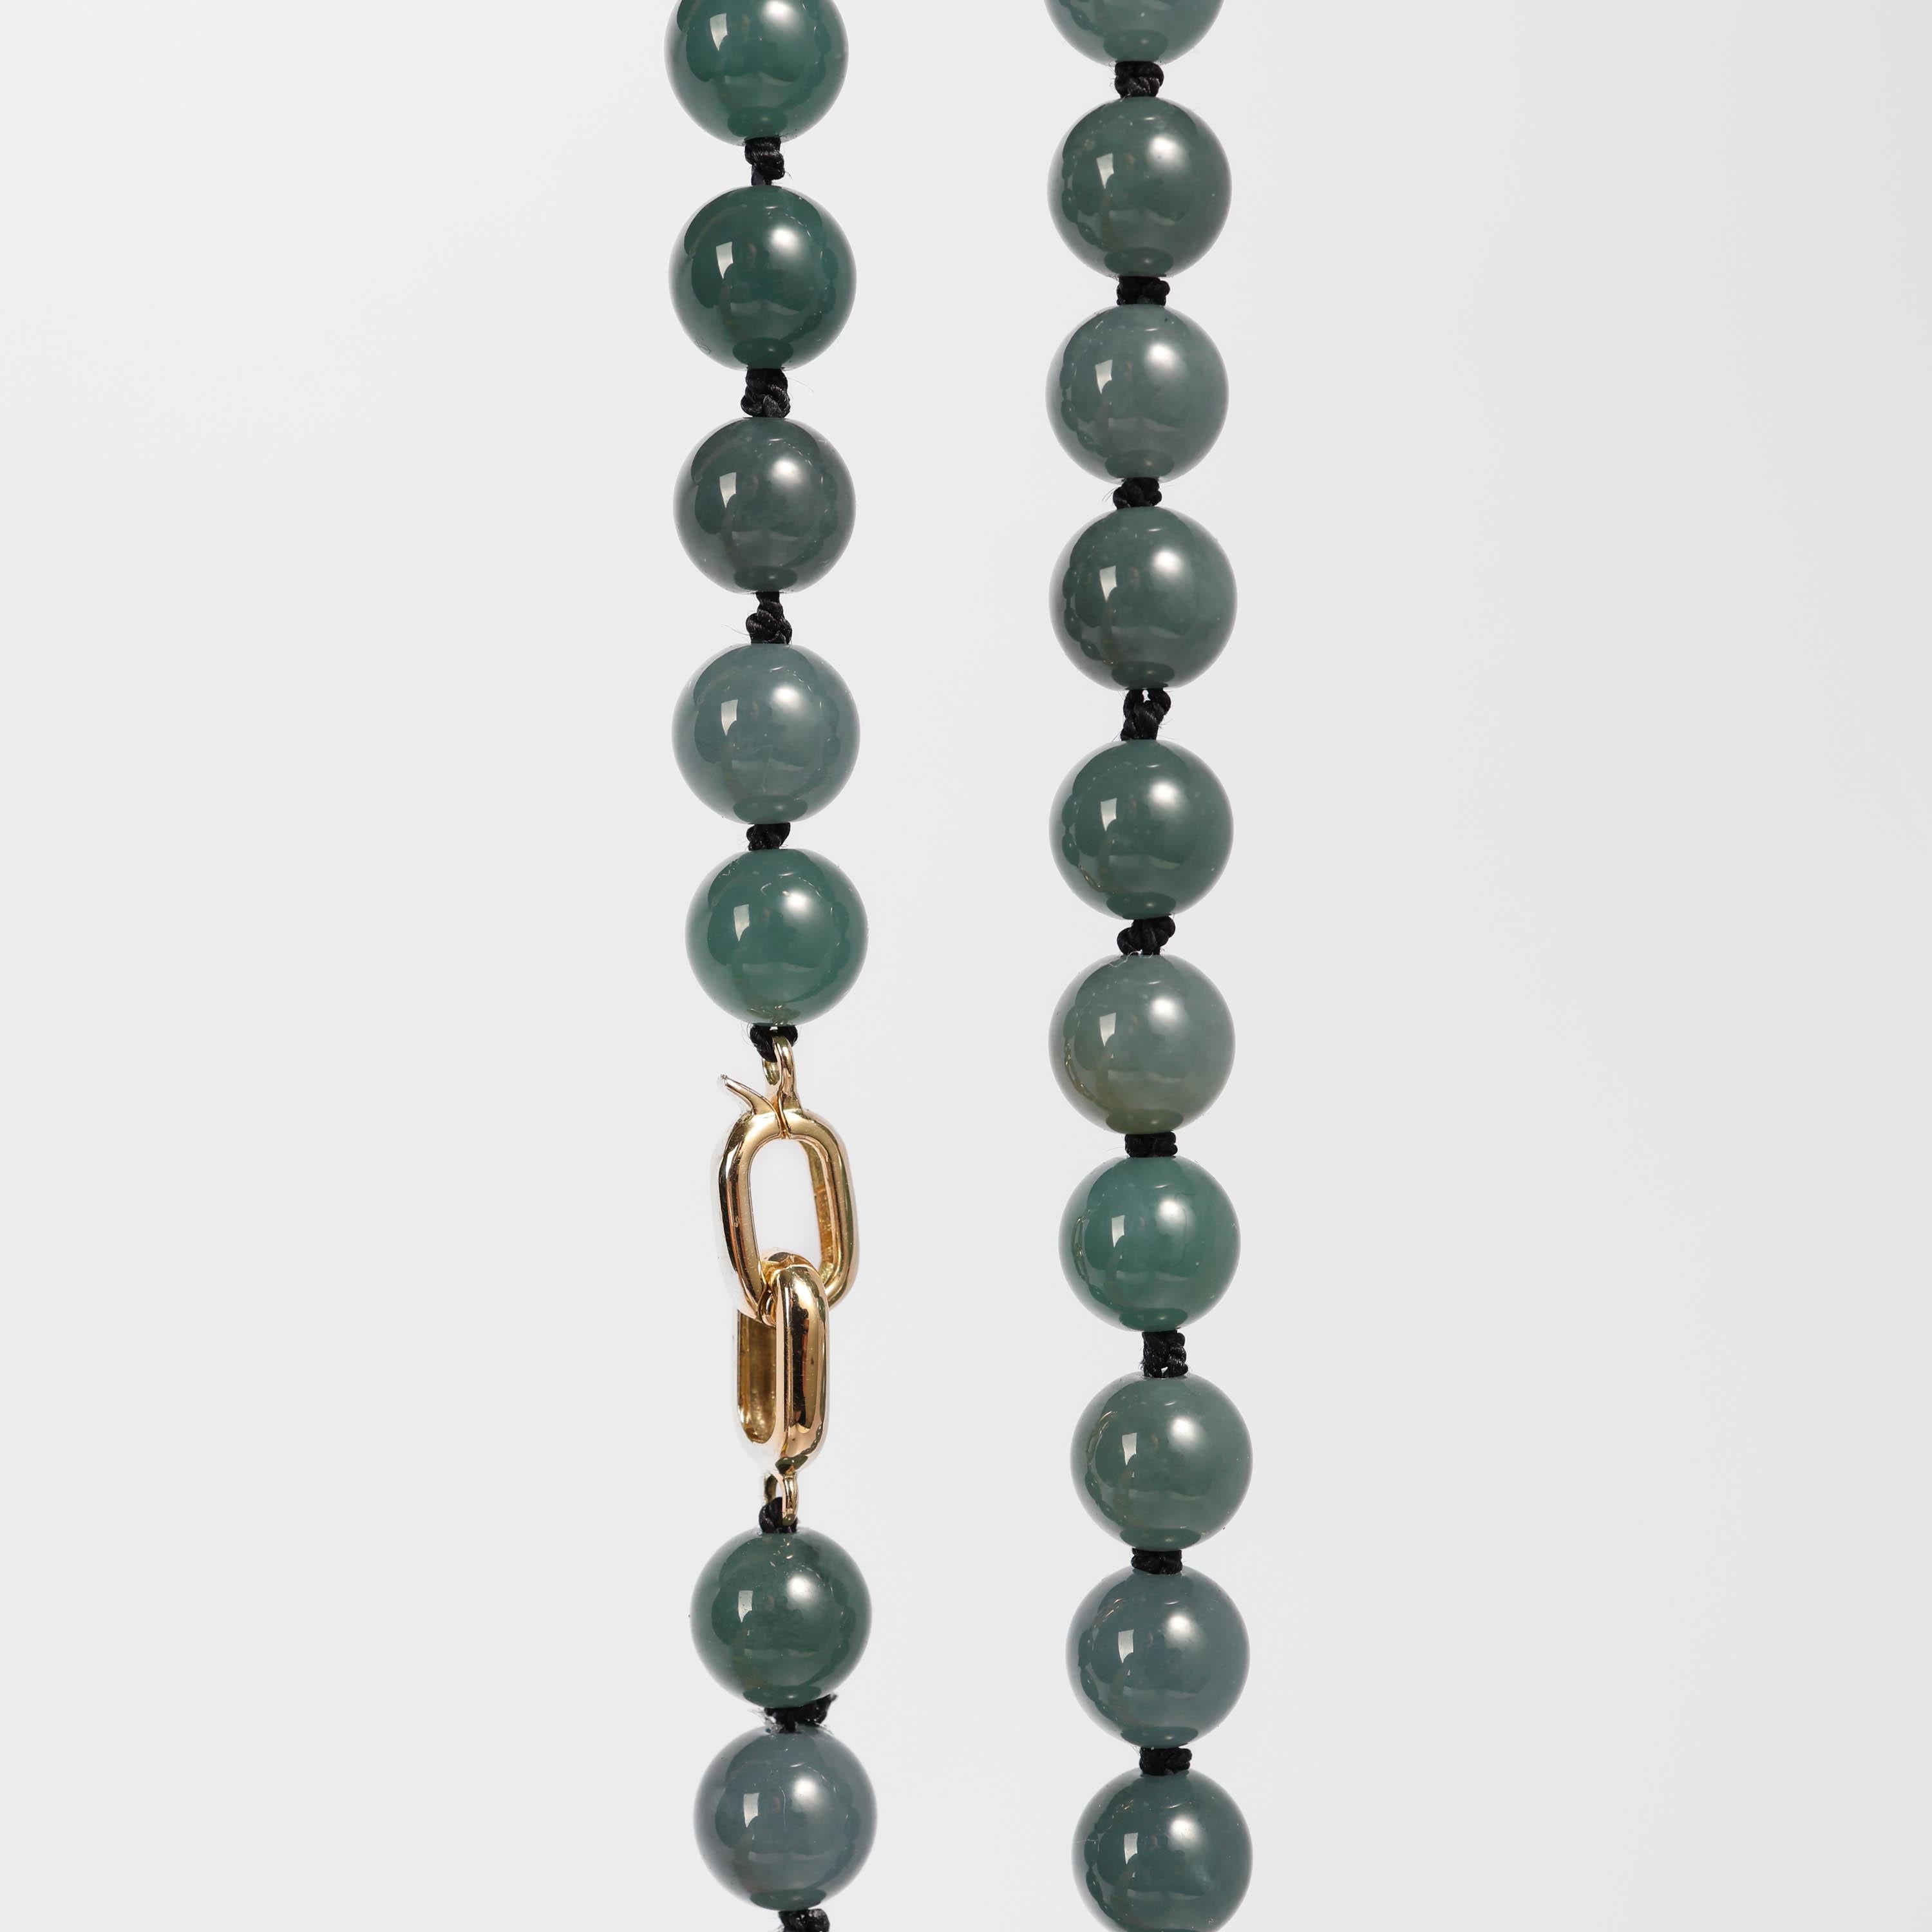 Artisan Jade Necklace Translucent Greenish-Blue Certified Untreated, New, 25